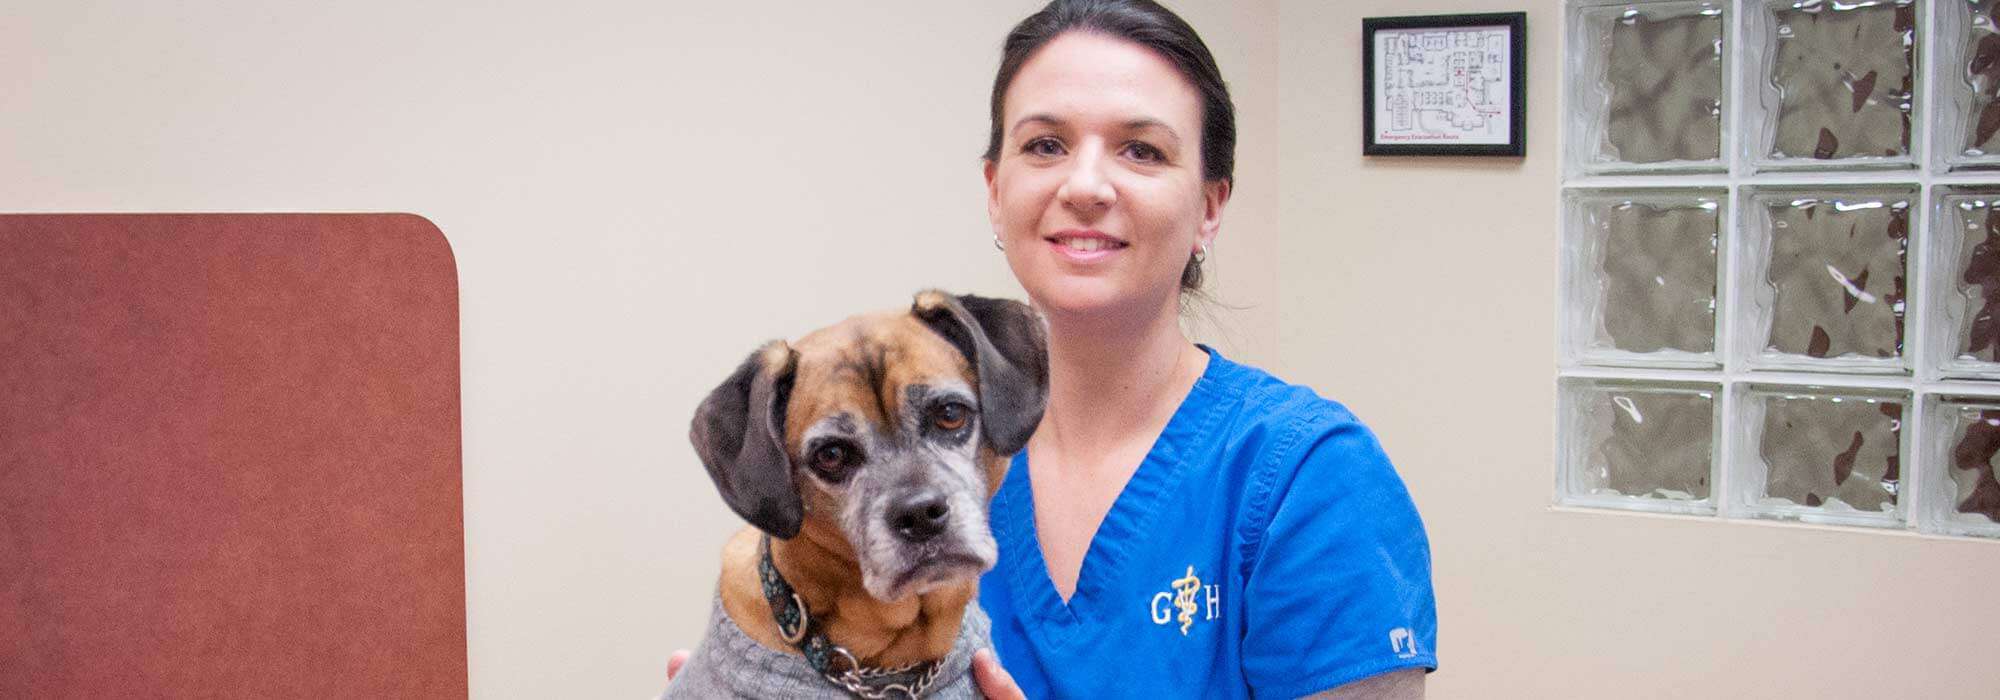 Veterinary Services in Cincinnati OH